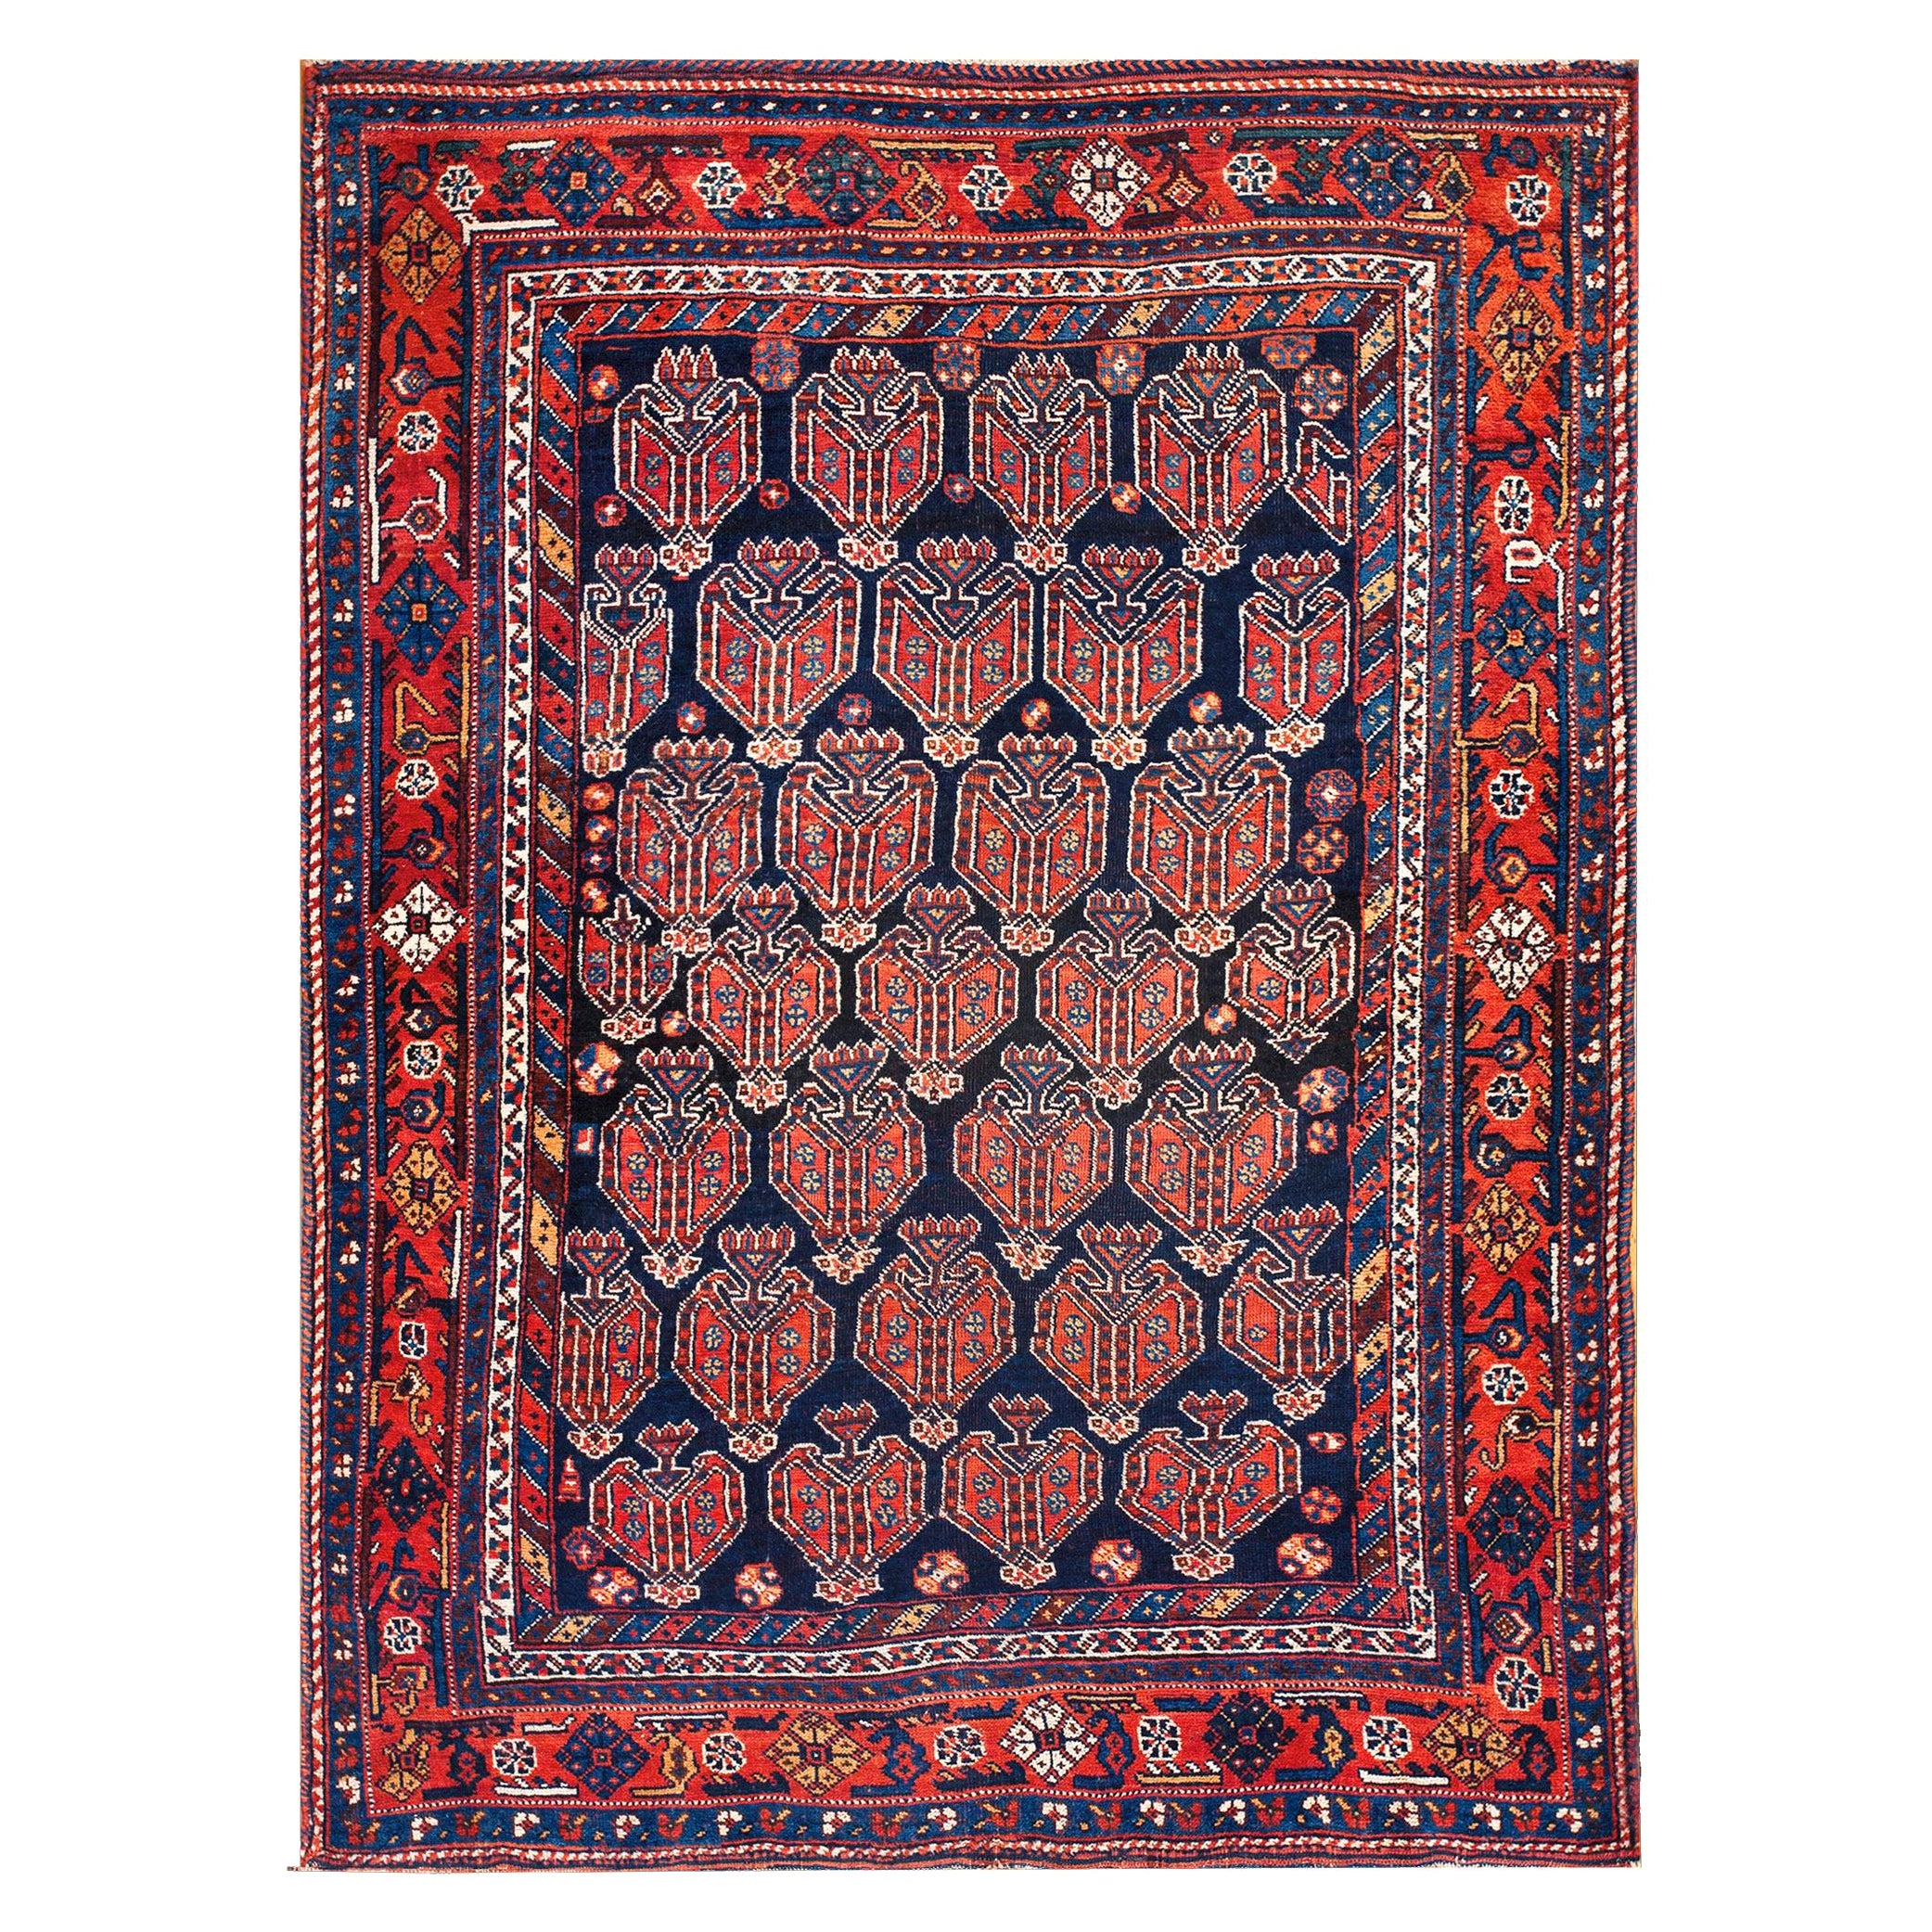 Early 20th Century Persian Afshar Carpet ( 4' 5" x 5' 10" - 135 x 178 cm )